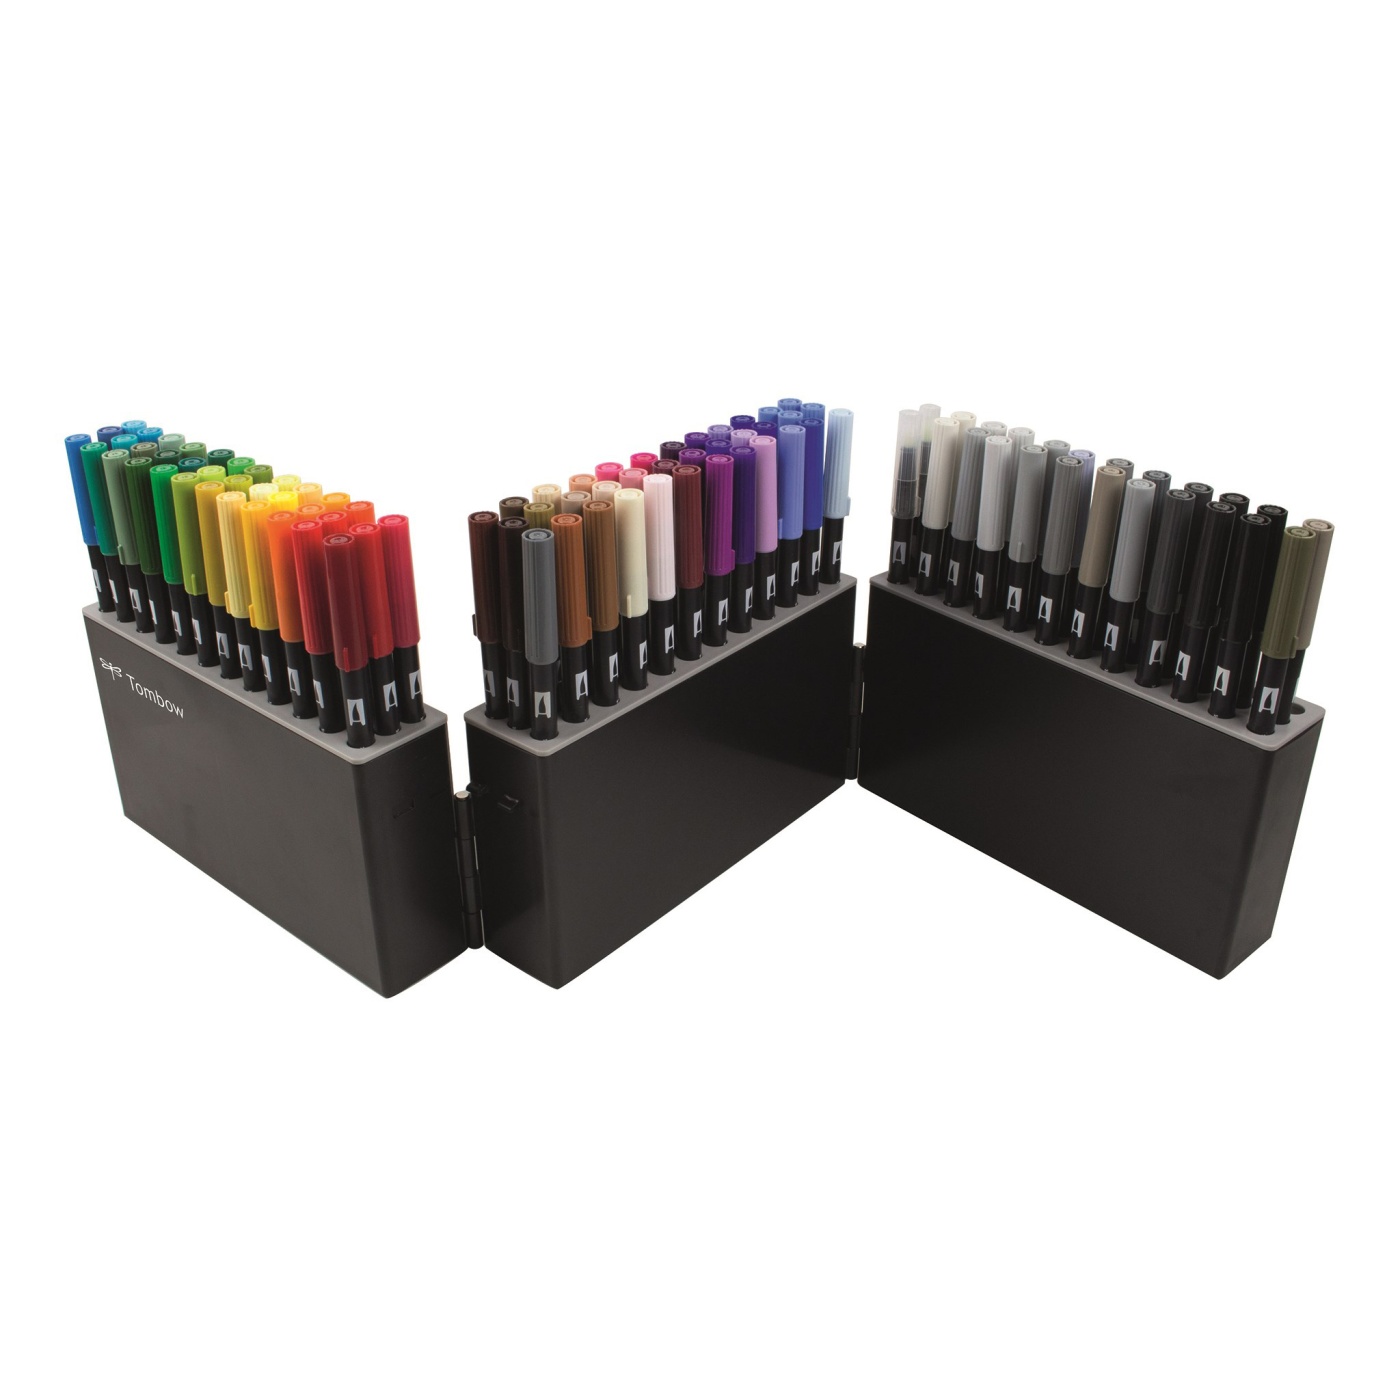 ABT Dual Brush Pen Box Case 108 stk Sæt i gruppen Penne / Produktserie / ABT Dual Brush hos Pen Store (101109)